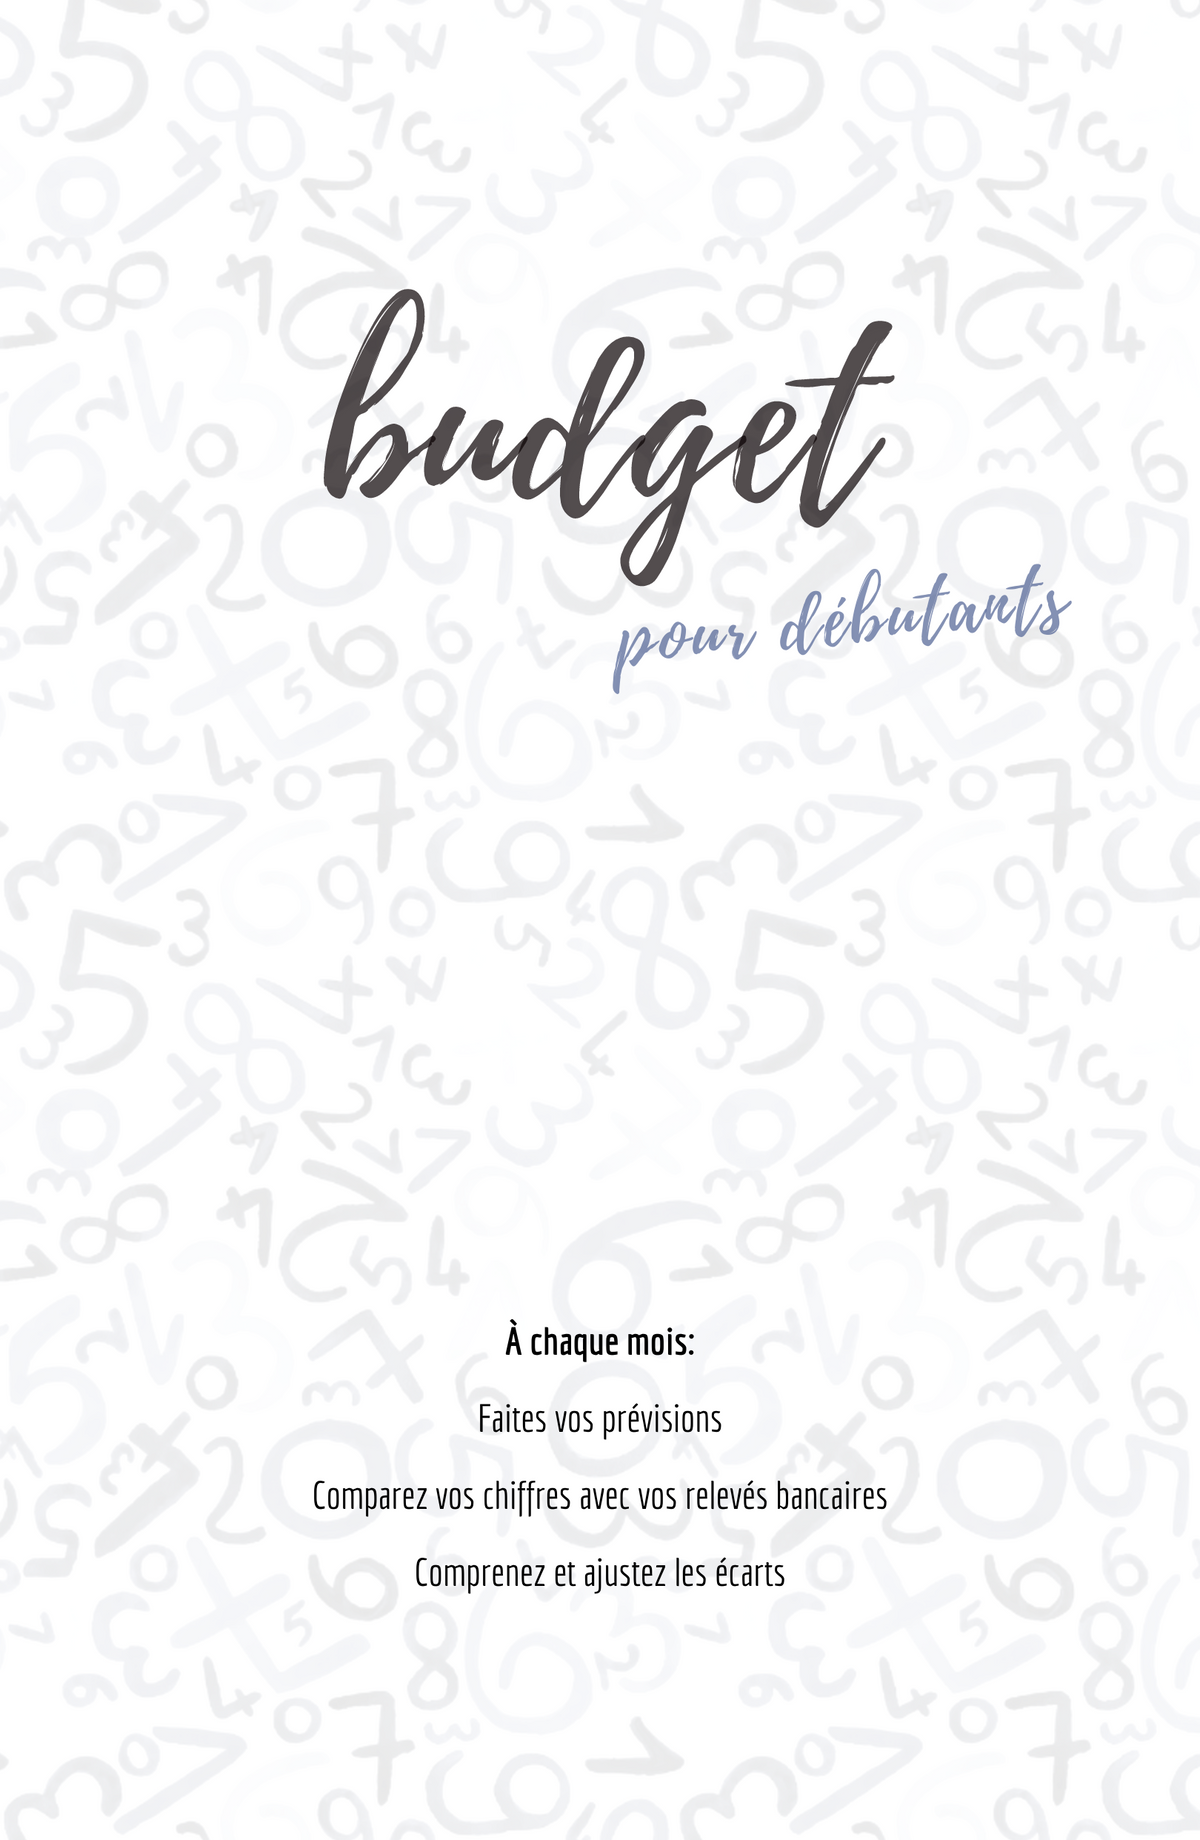 Agenda &amp; budget #64